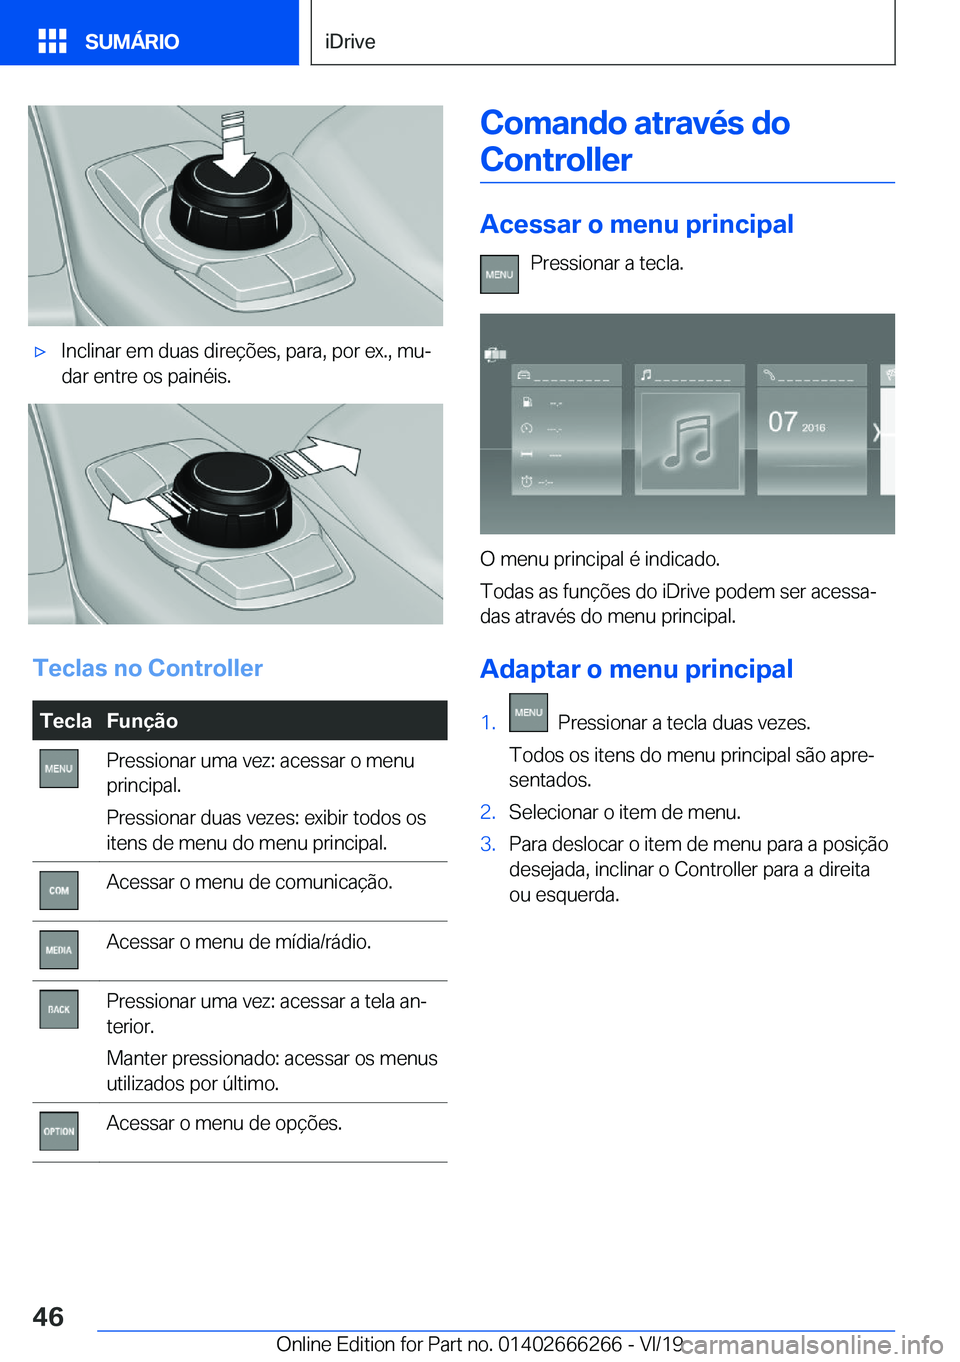 BMW 2 SERIES COUPE 2020  Manual do condutor (in Portuguese) x�I�n�c�l�i�n�a�r��e�m��d�u�a�s��d�i�r�e�